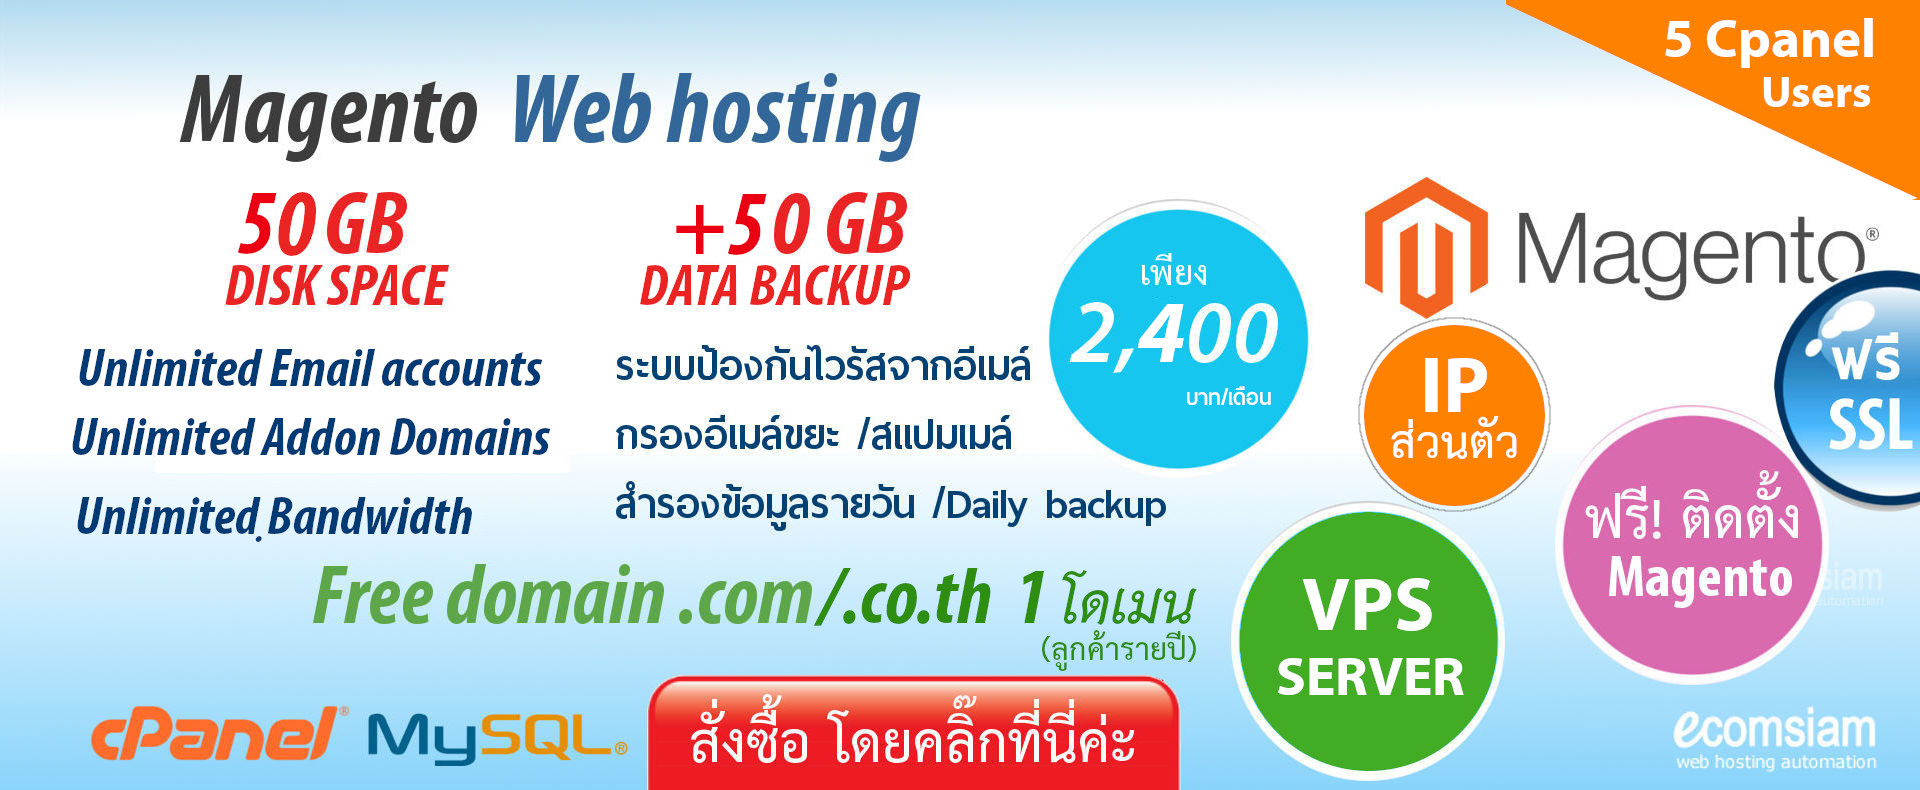 web hosting thailand แนะนำ magento web hosting - vps server เพียง 2,400 บ./เดือน  พิเศษสุดๆ ลูกค้ารายปีชำระเพียง 11 เดือน และ ฟรี จดโดเมน หรือต่ออายุโดเมนตลอดการใช้งาน เว็บโฮสติ้งไทย ฟรี โดเมน ฟรี SSL ฟรีติดตั้ง แนะนำเว็บโฮสติ้ง บริการลูกค้า  Support ดูแลดี โดย ecomsiam.com - magento web hosting thailand free domain